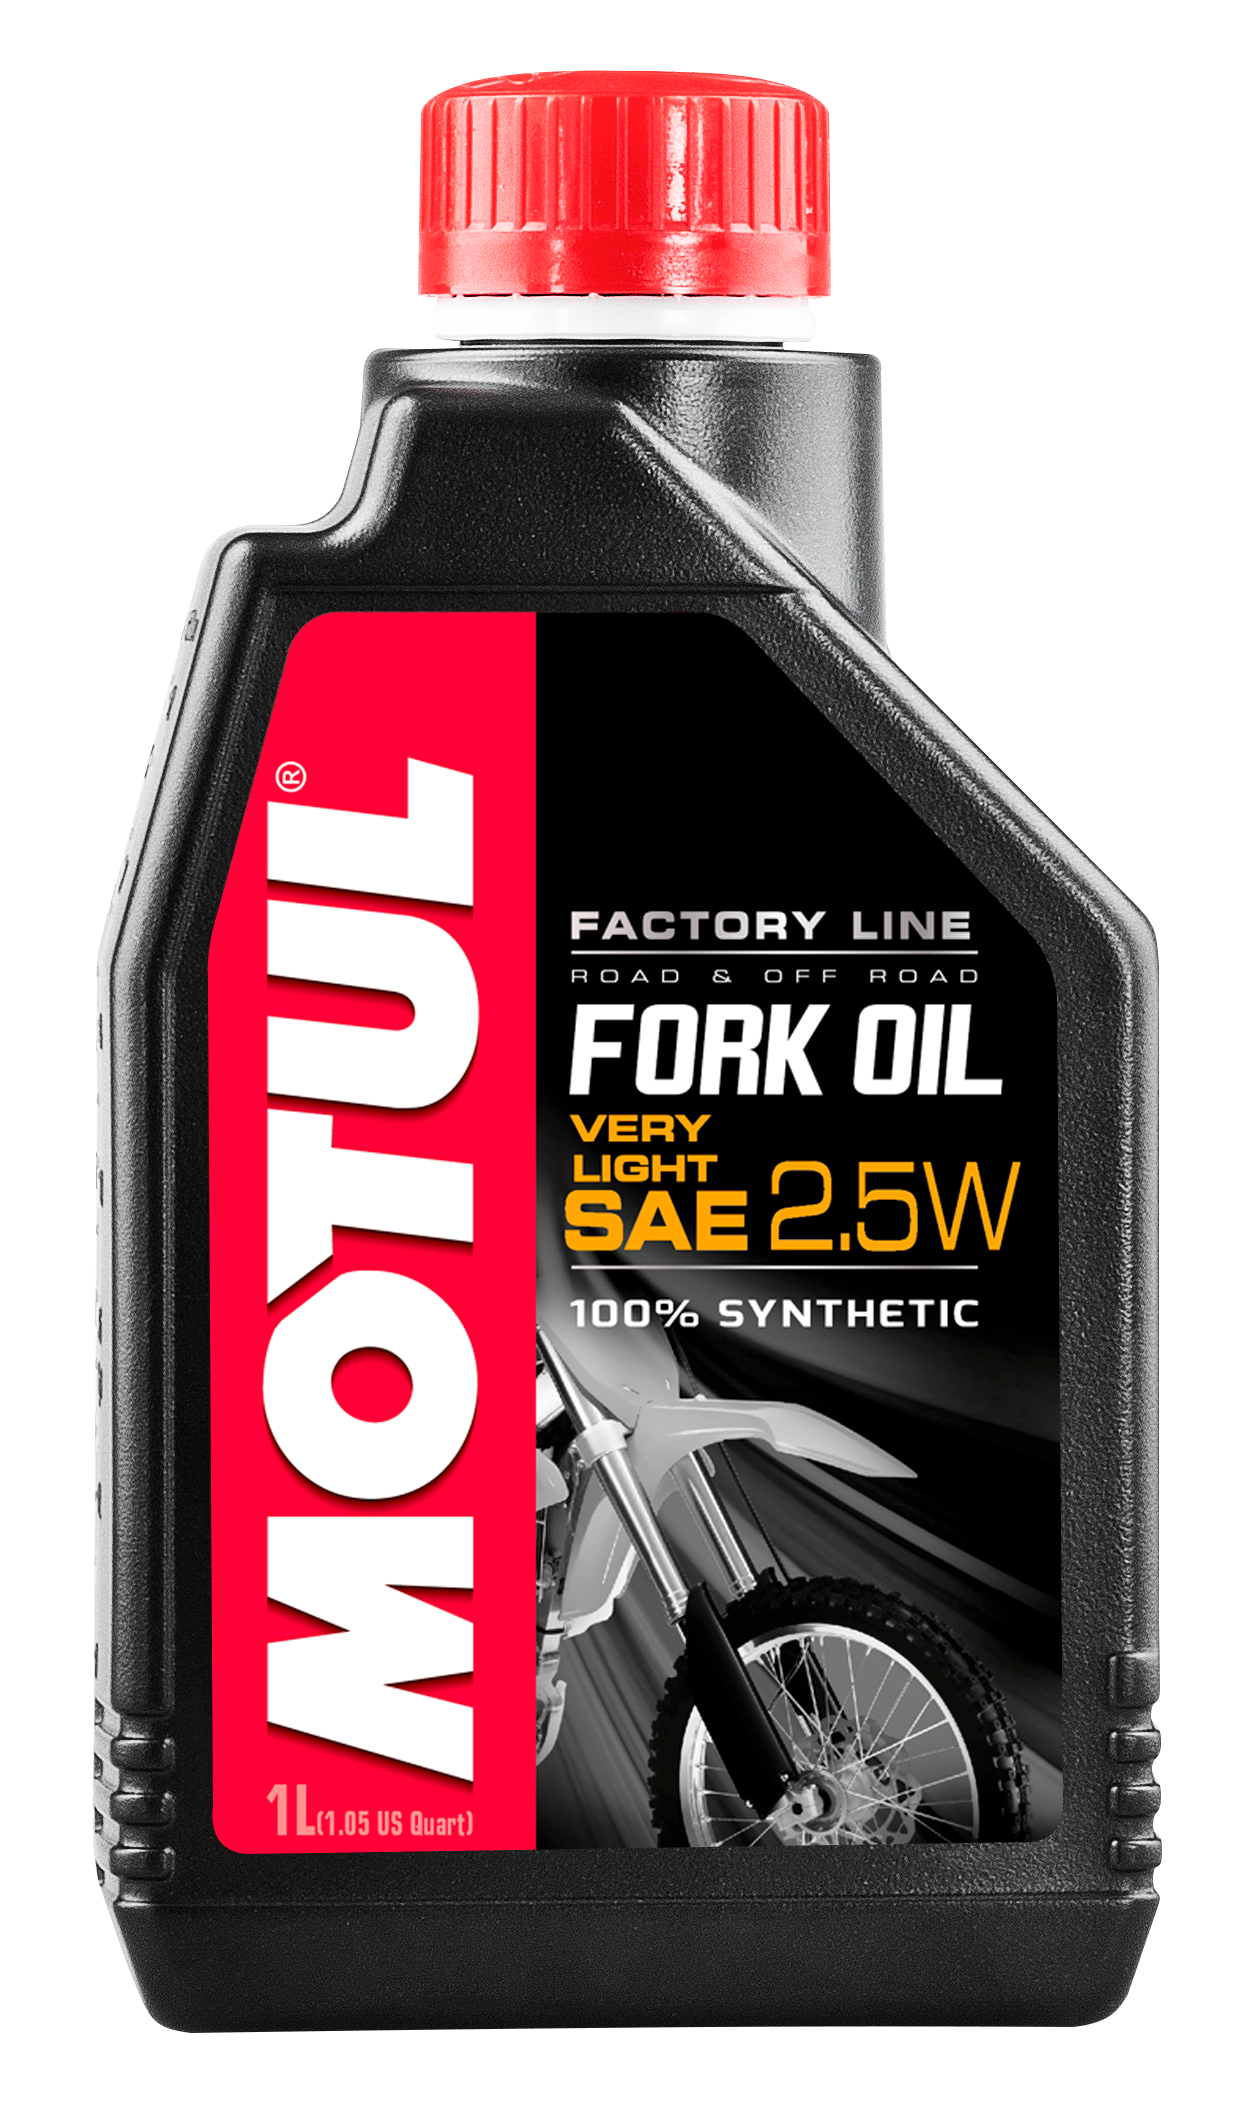 Motul Forkoil Factory Line 2,5W, 1 liter